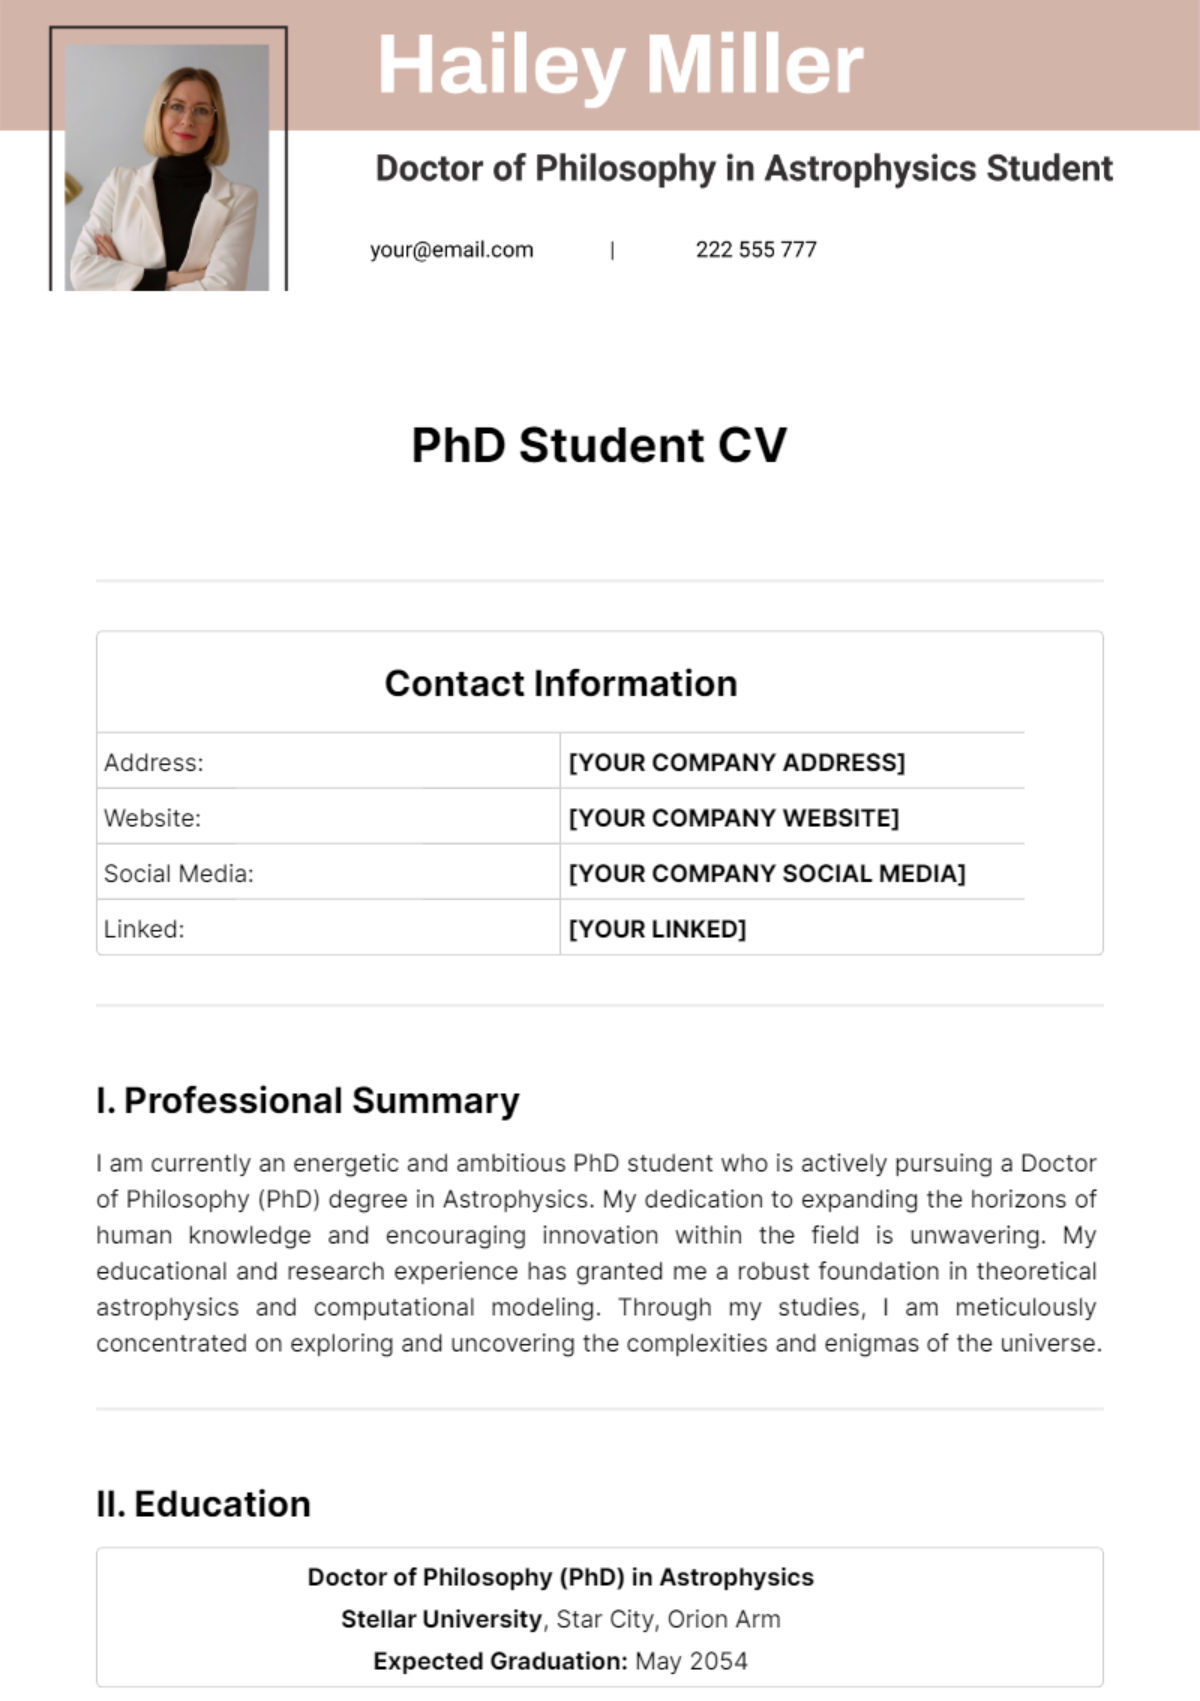 PhD Student CV Template